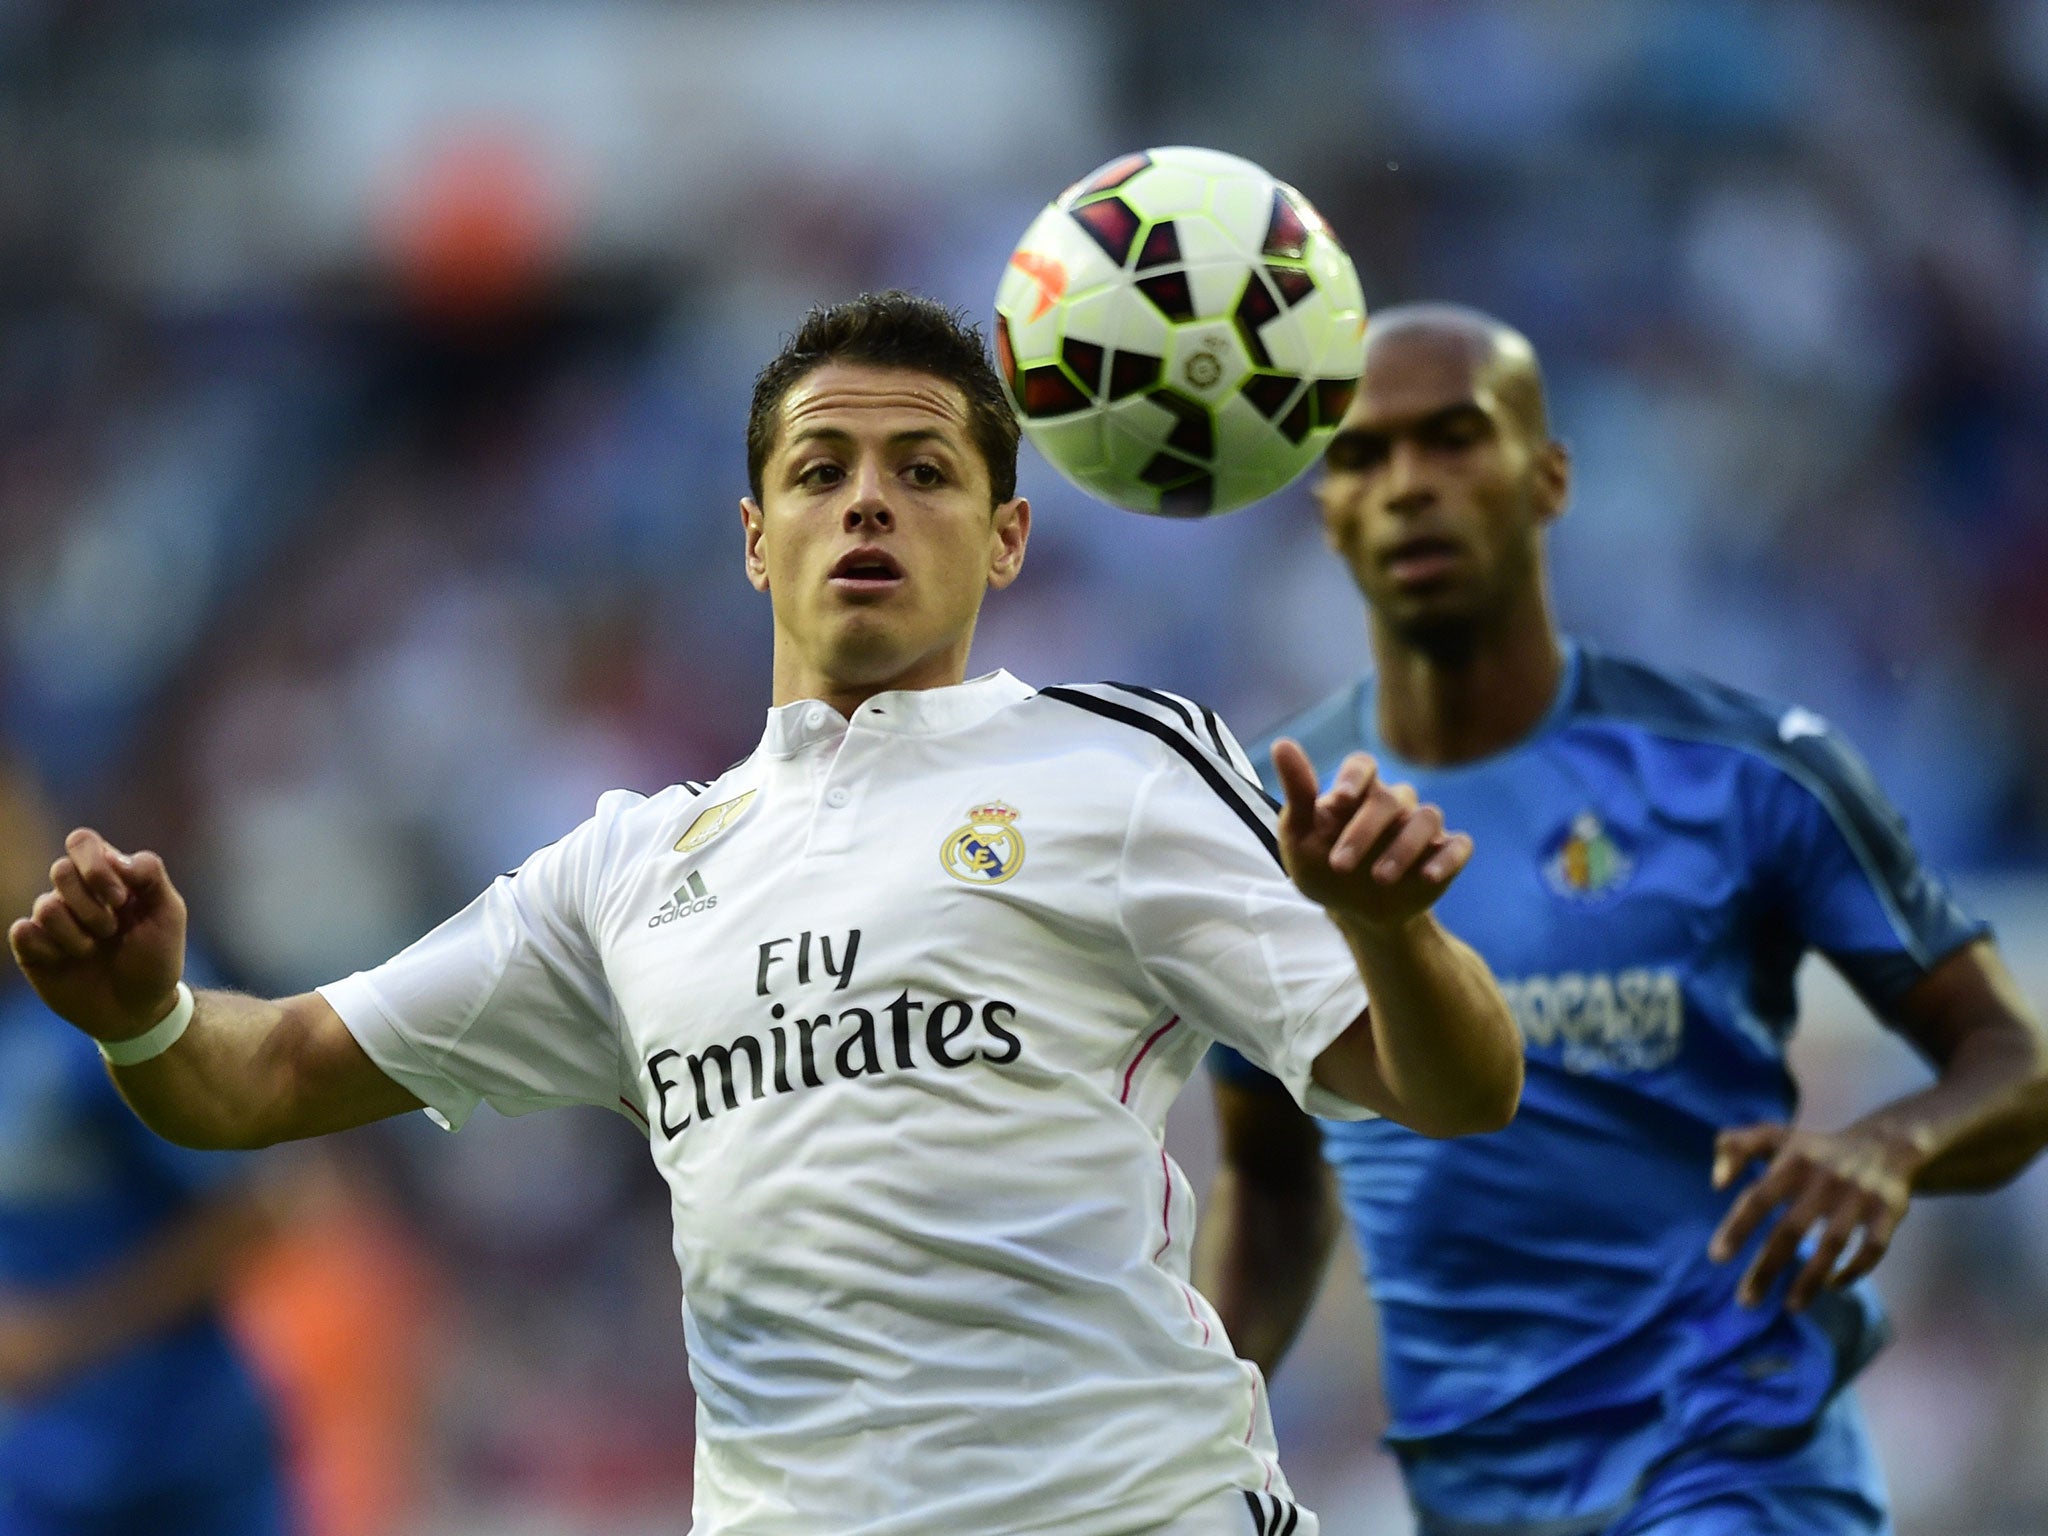 Javier Hernandez spent last season on loan at Real Madrid